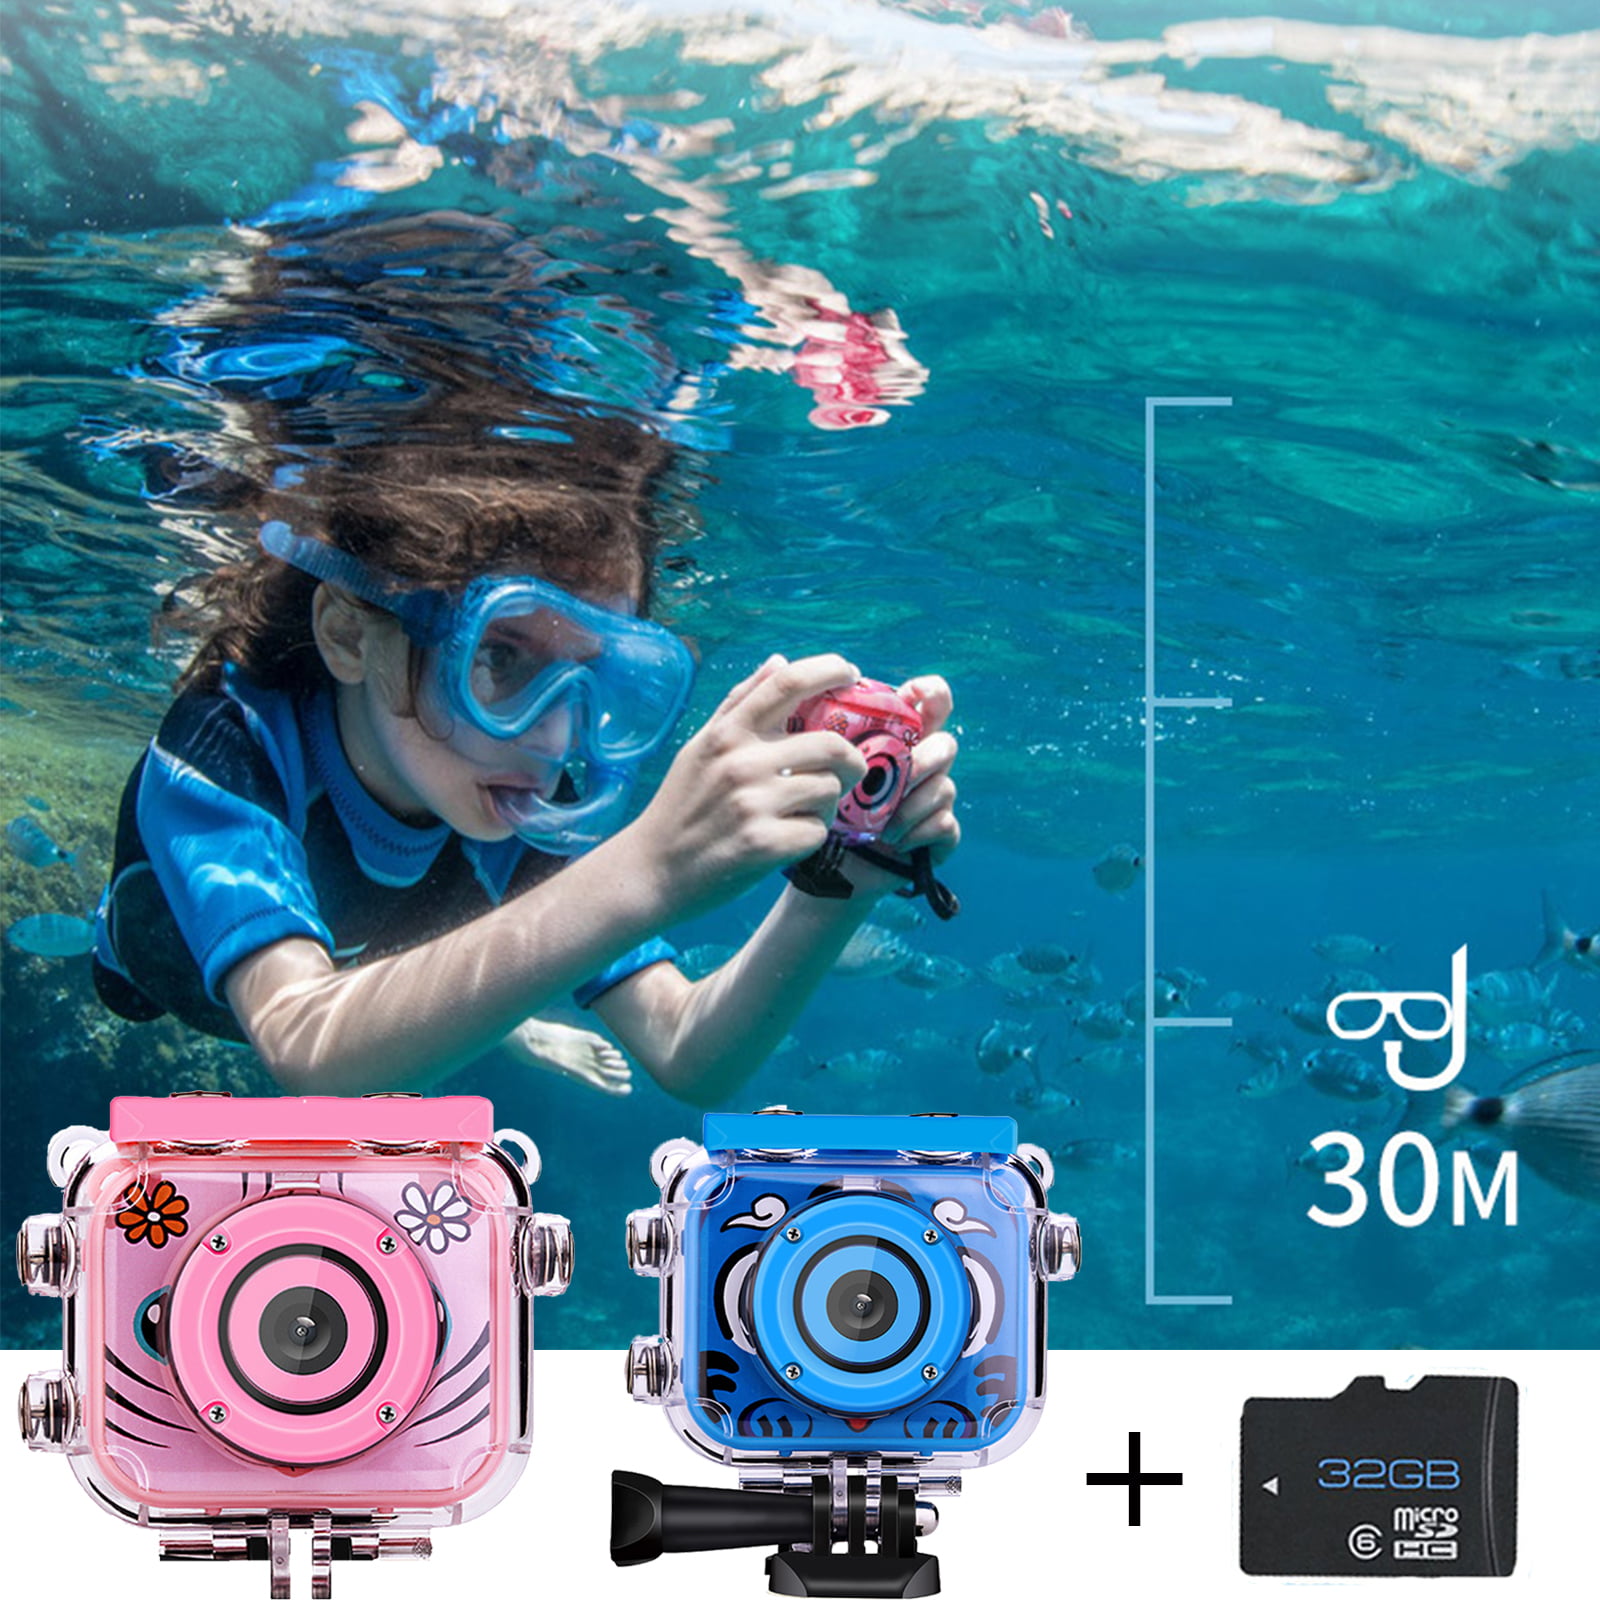 Boys Girls Action Camcorder Updated 2019 Model AIMTOM 12MP Orange Kids Underwater Digital Waterproof Camera 2” LCD Screen Children Birthday Learn Sports Cam Floating Wrist Strap Included